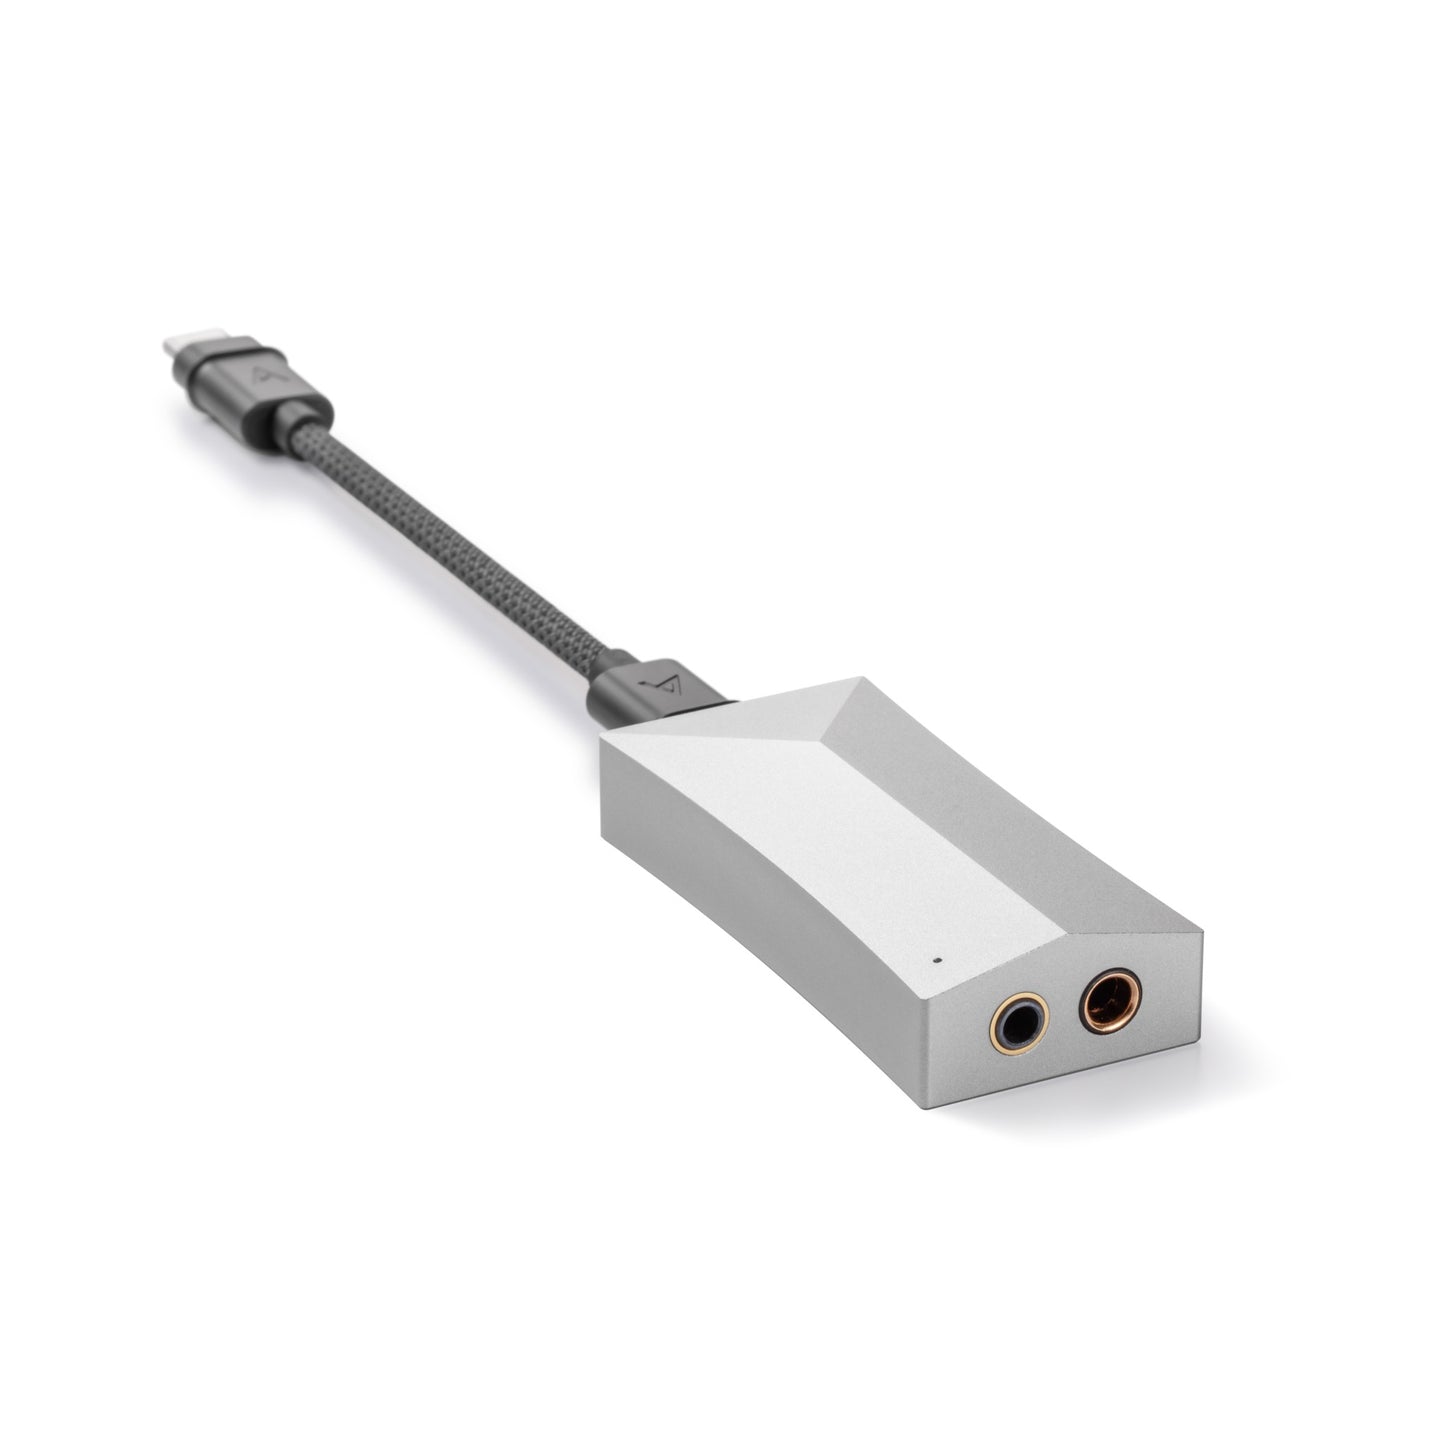 Astell Kern AK HC4 Hi-Fi DAC Adapter Cable Type C to 3.5mm 4.4mm Earphone